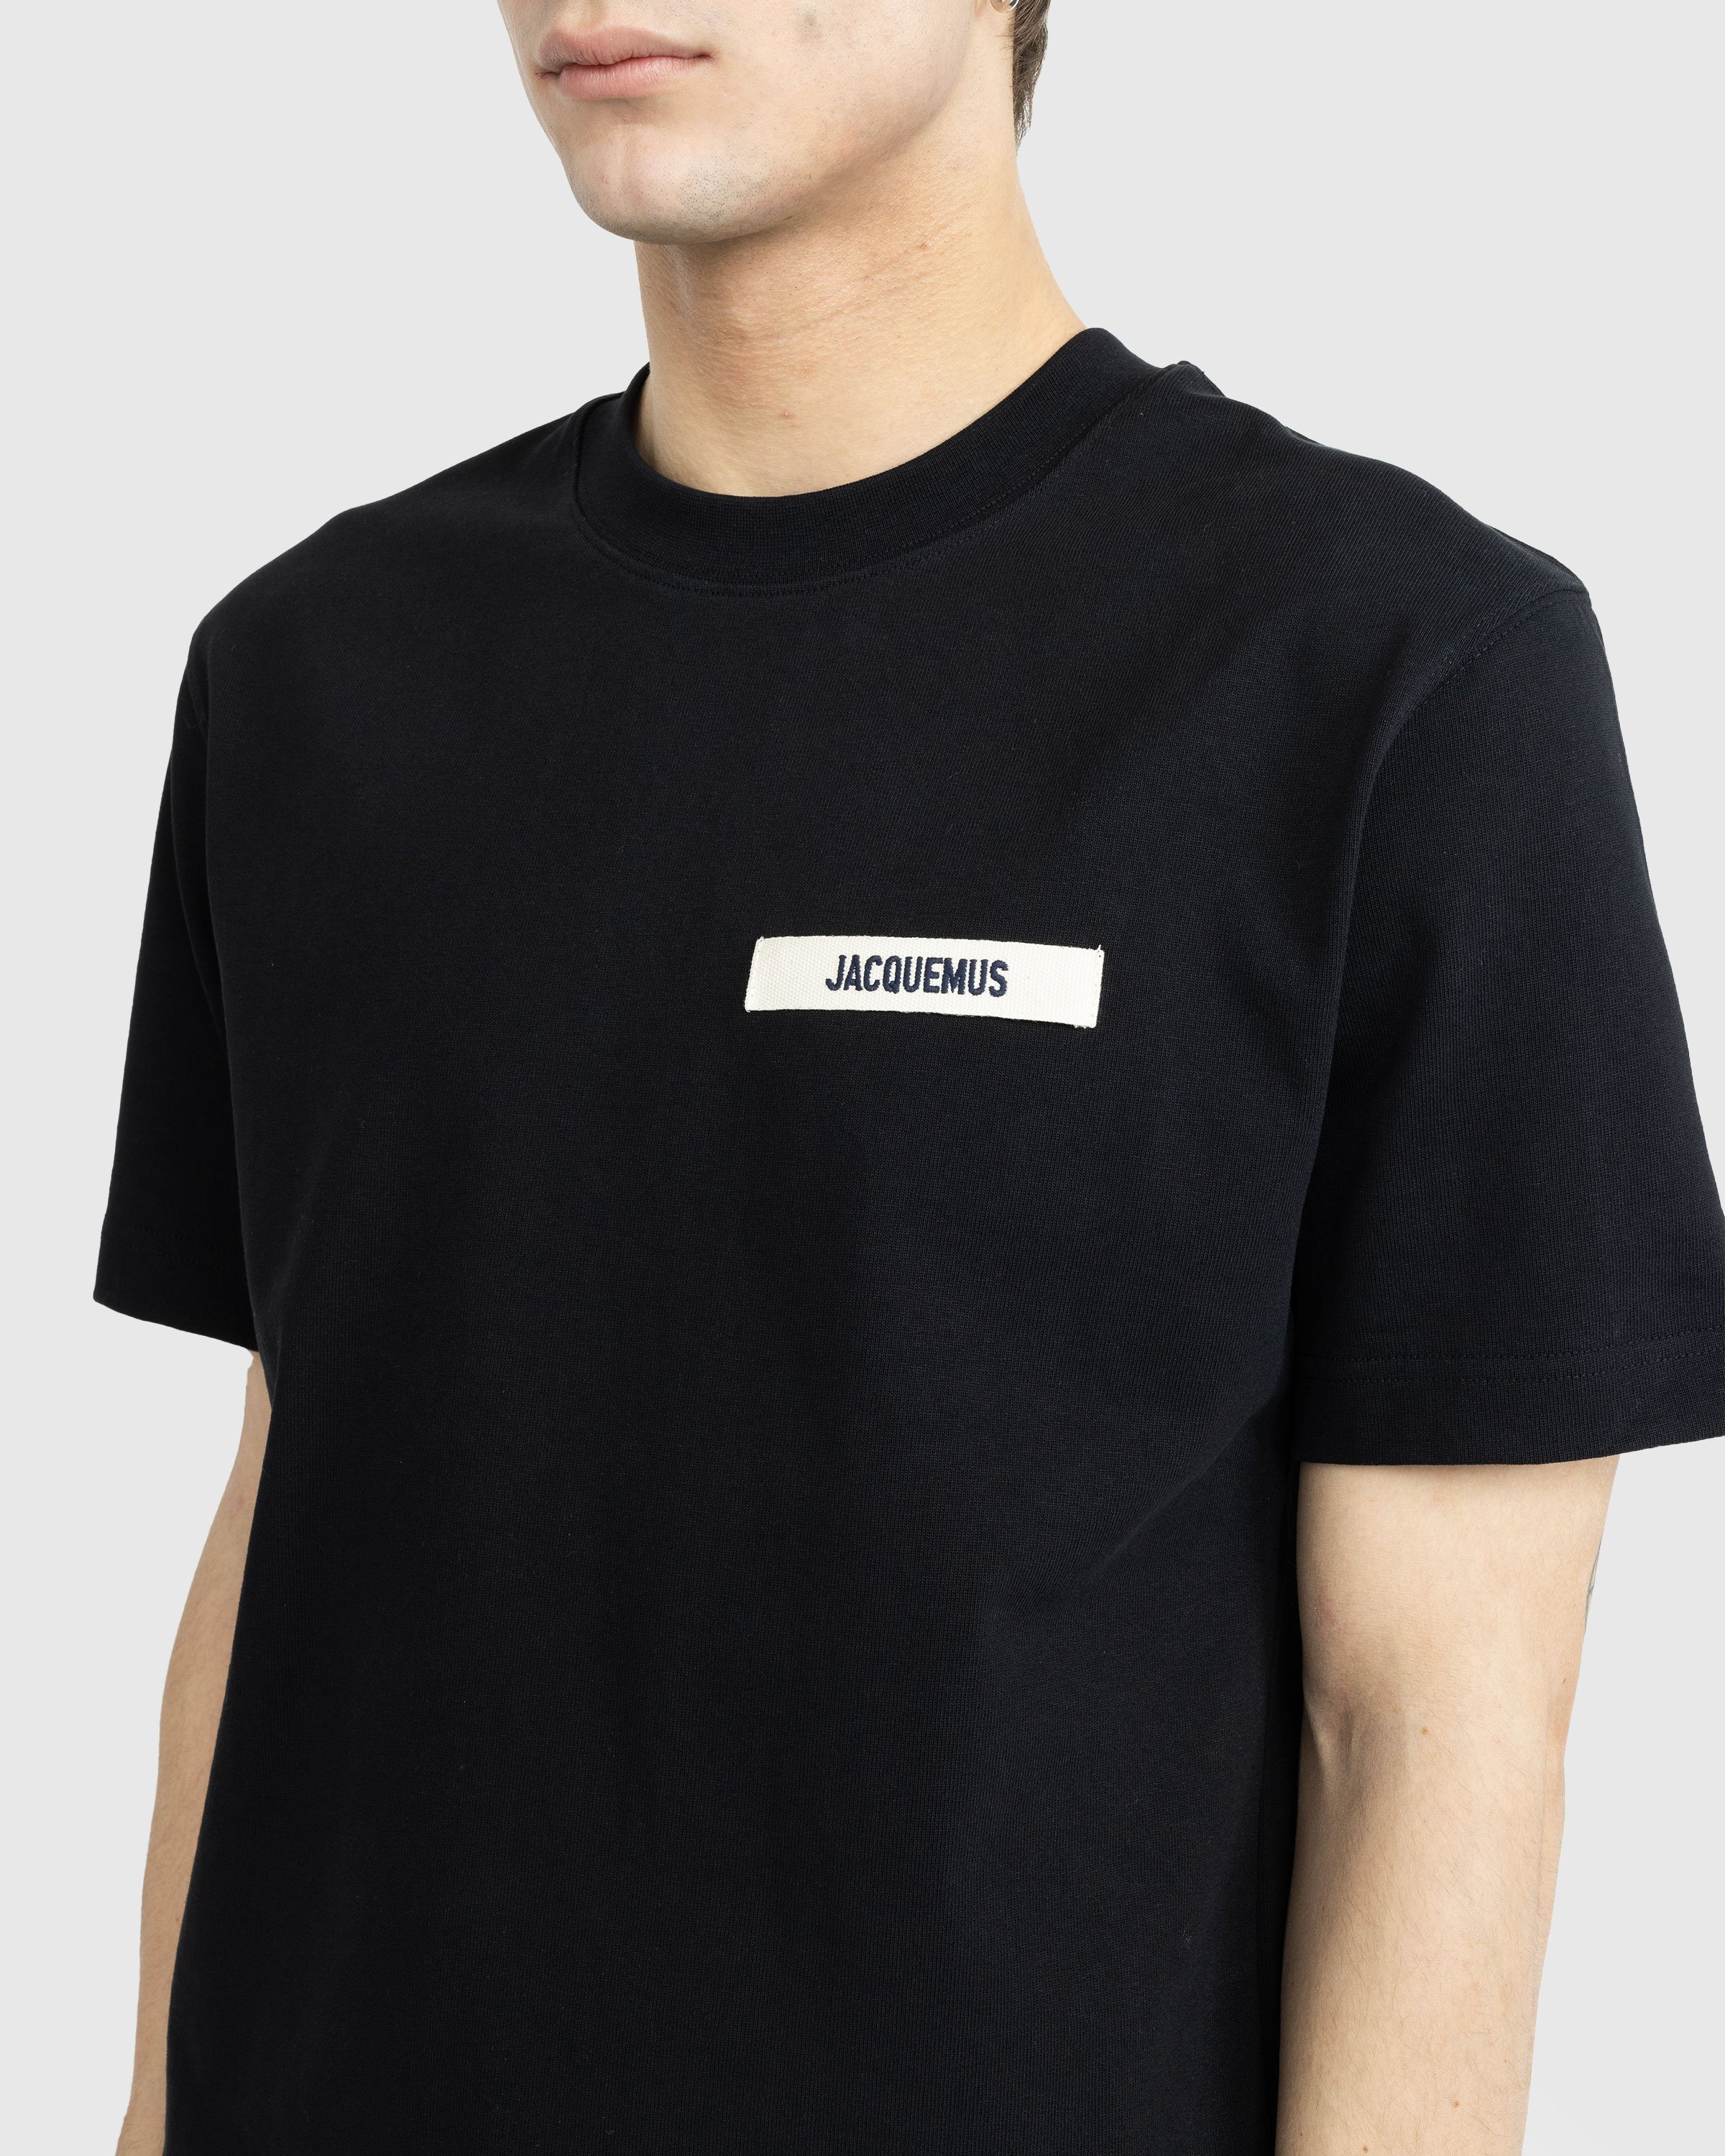 JACQUEMUS - Le T-Shirt Gros Grain Black - Clothing - Black - Image 5